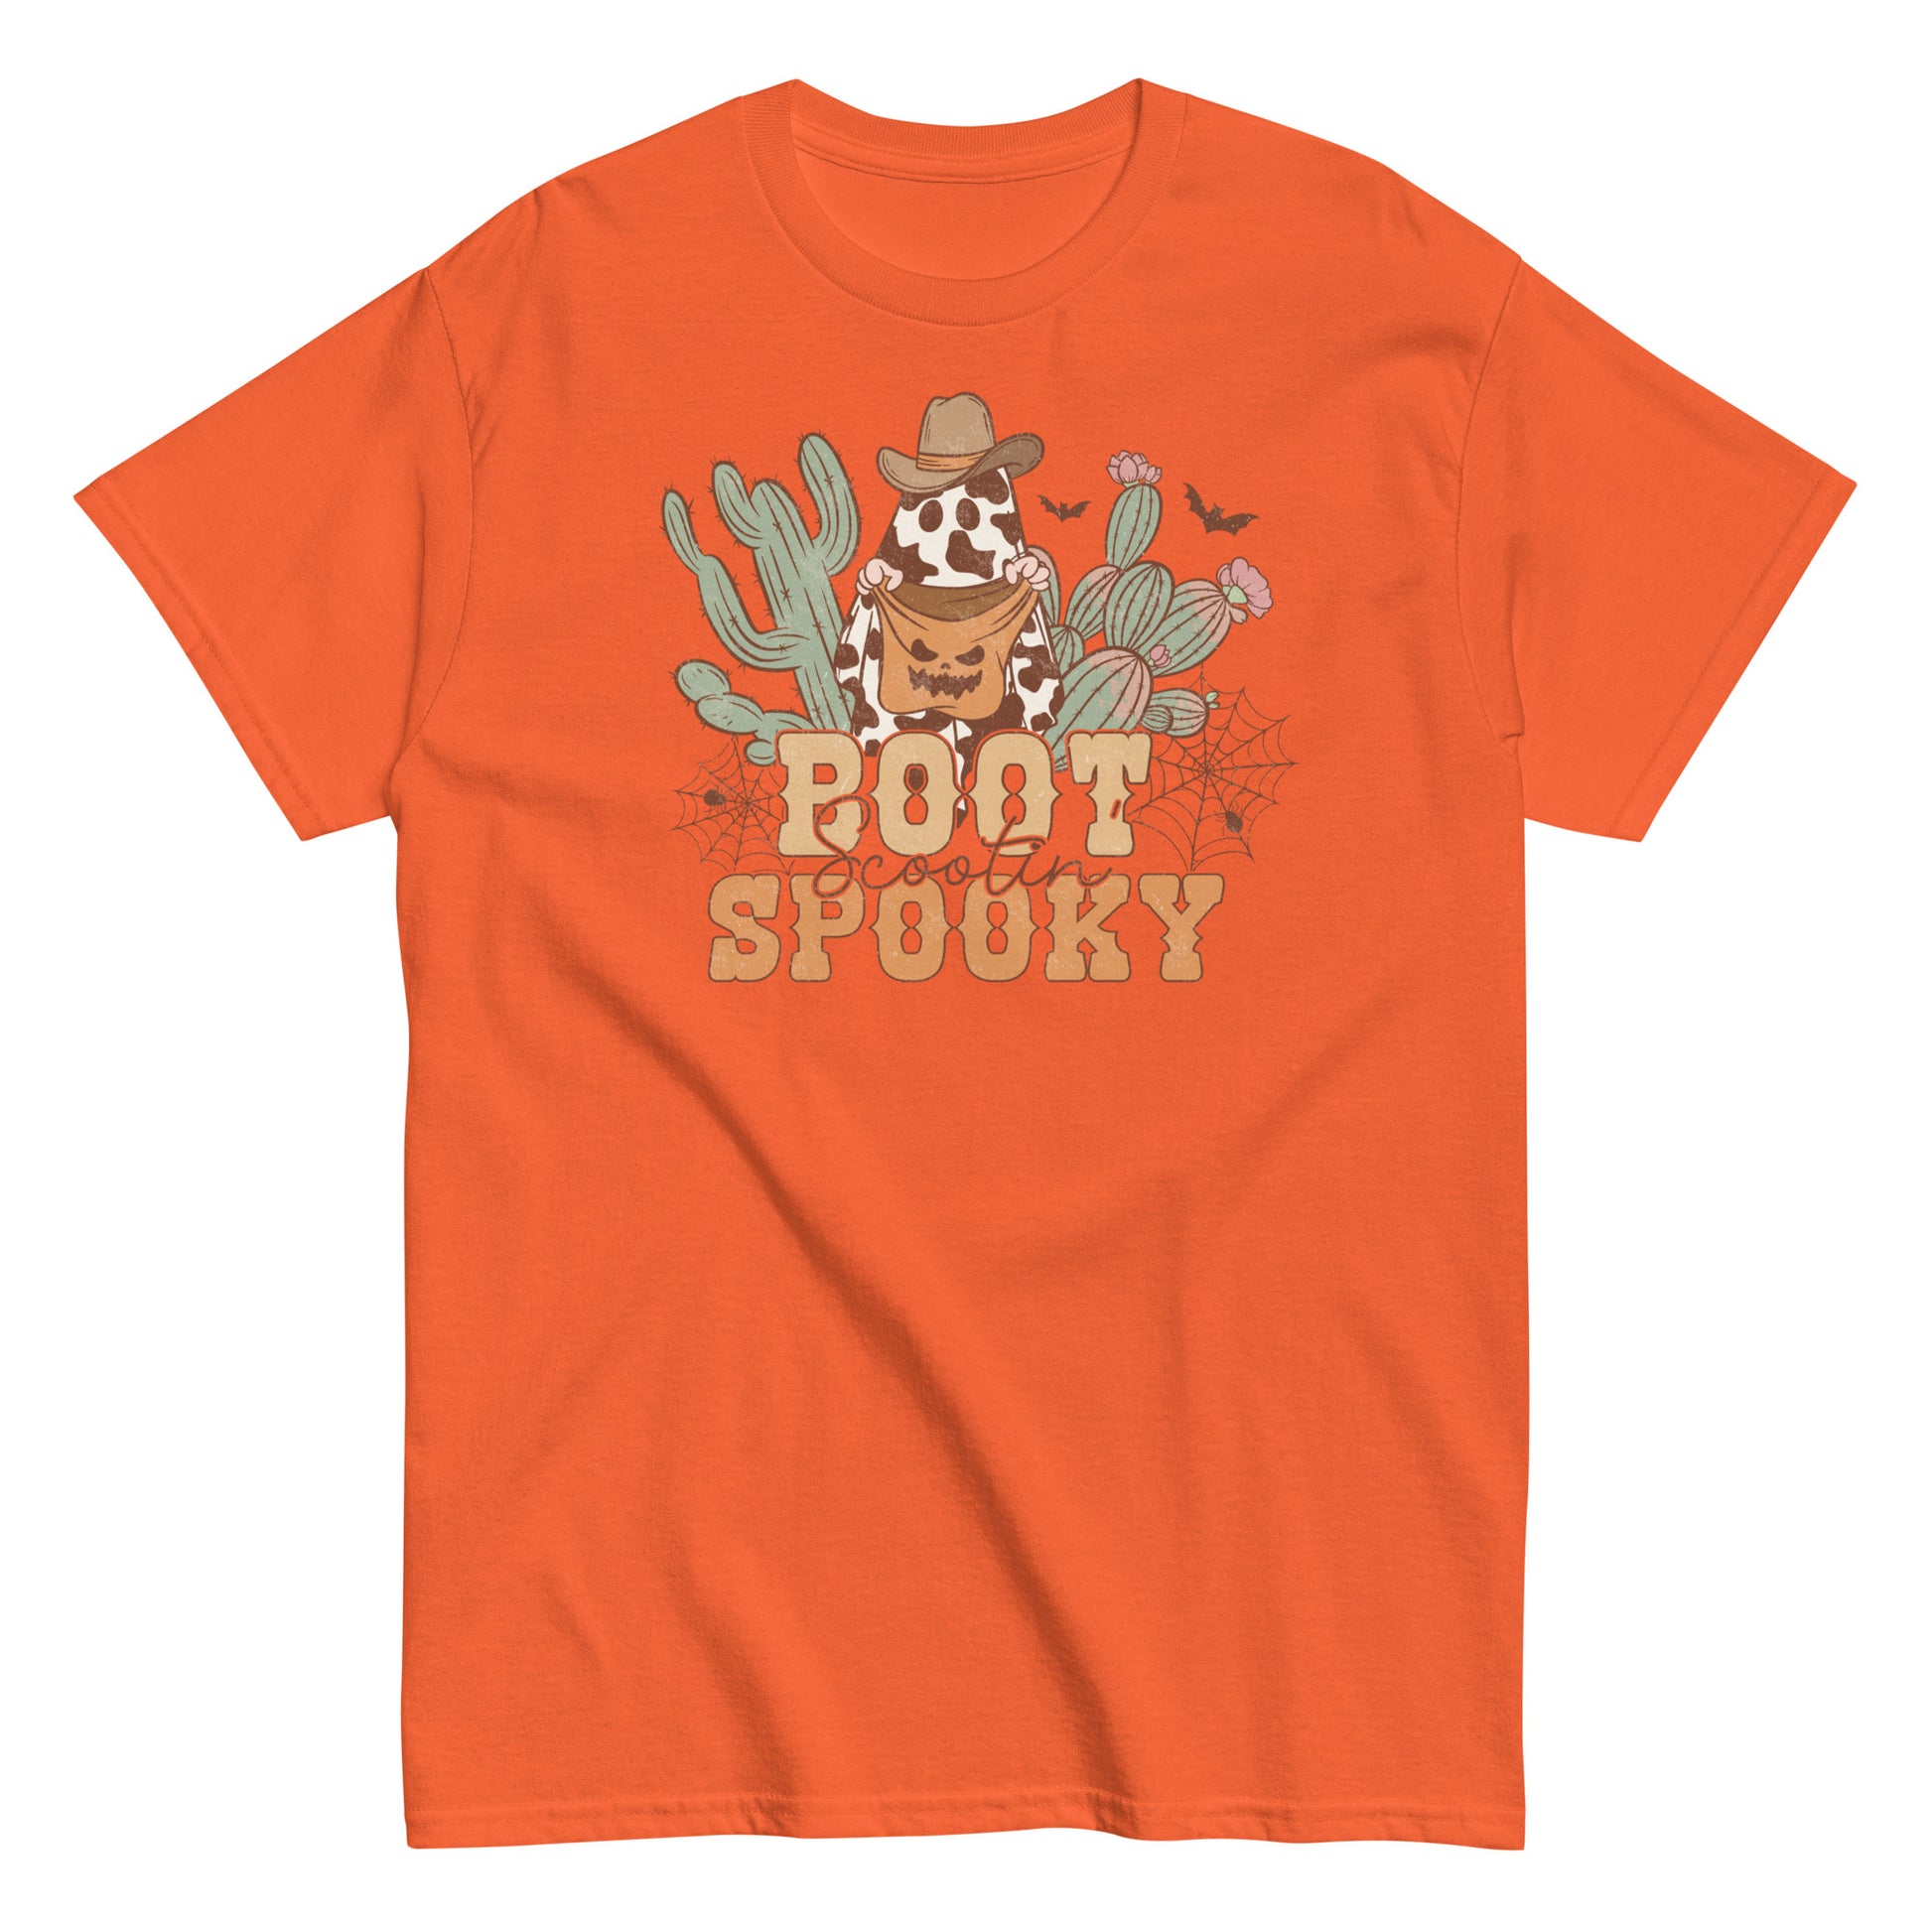 Boot Scootin' Spooky' Chic Halloween Tee